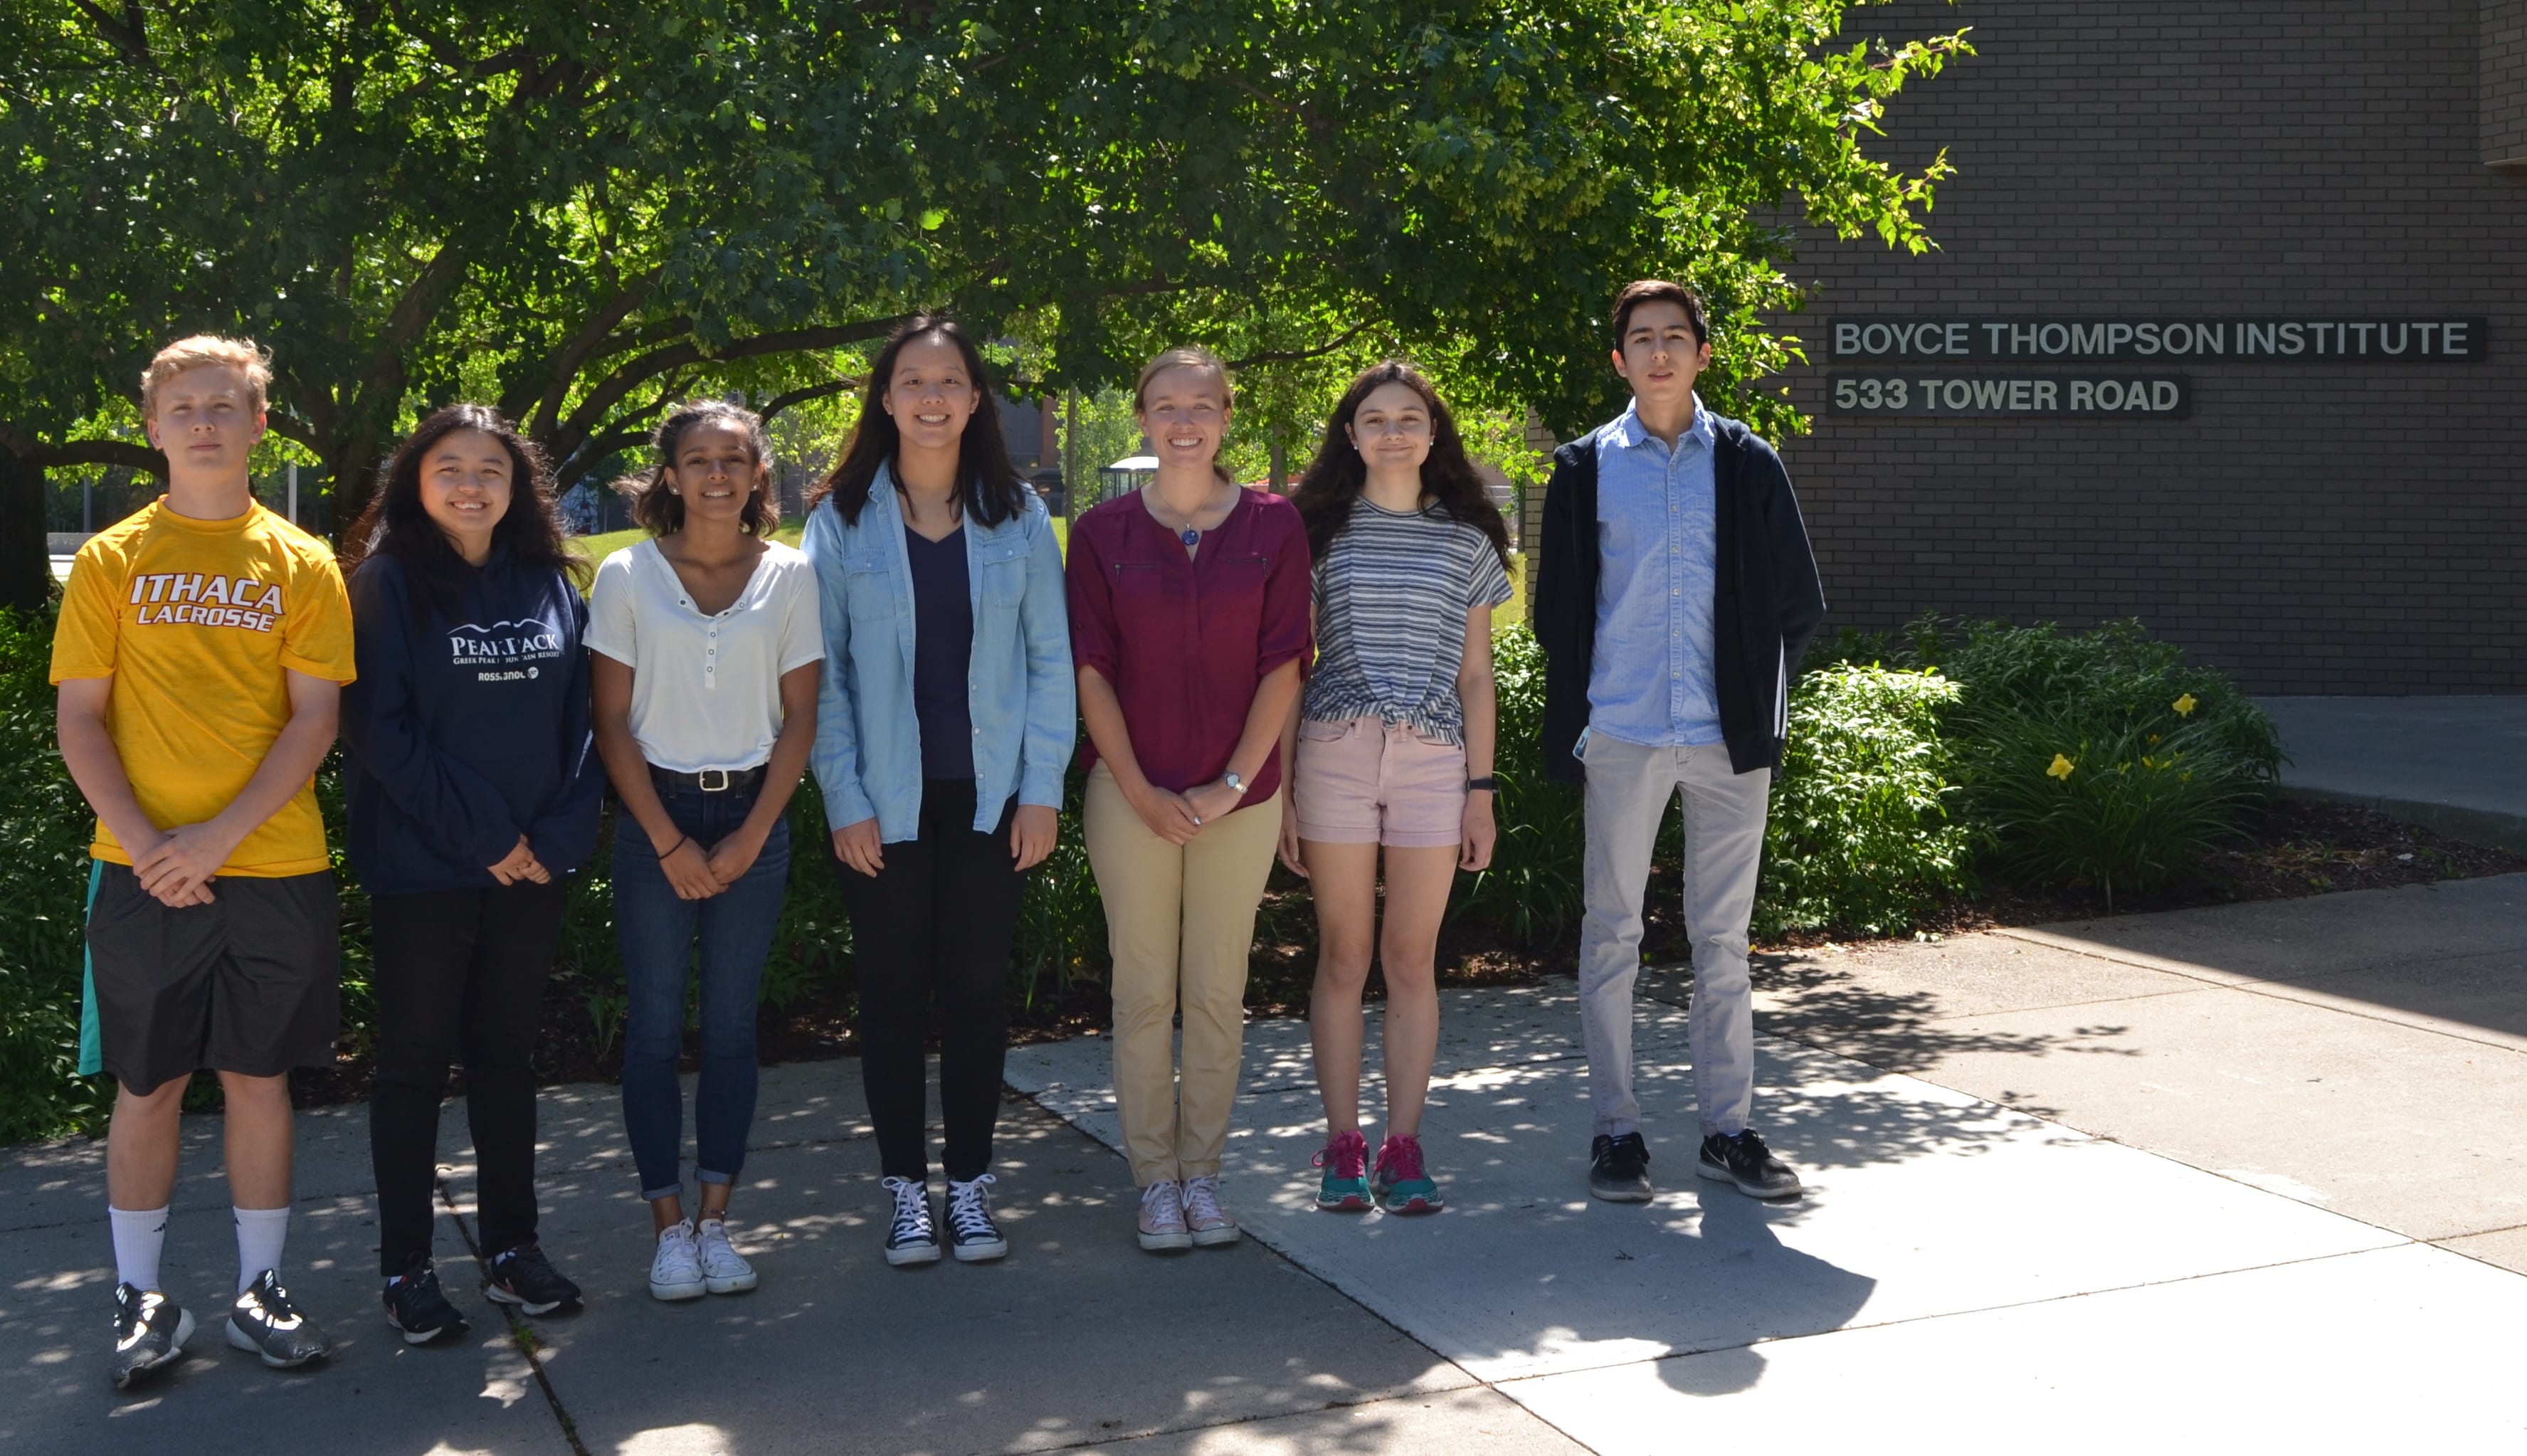 Group photo of the 2018 BTI summer high school interns